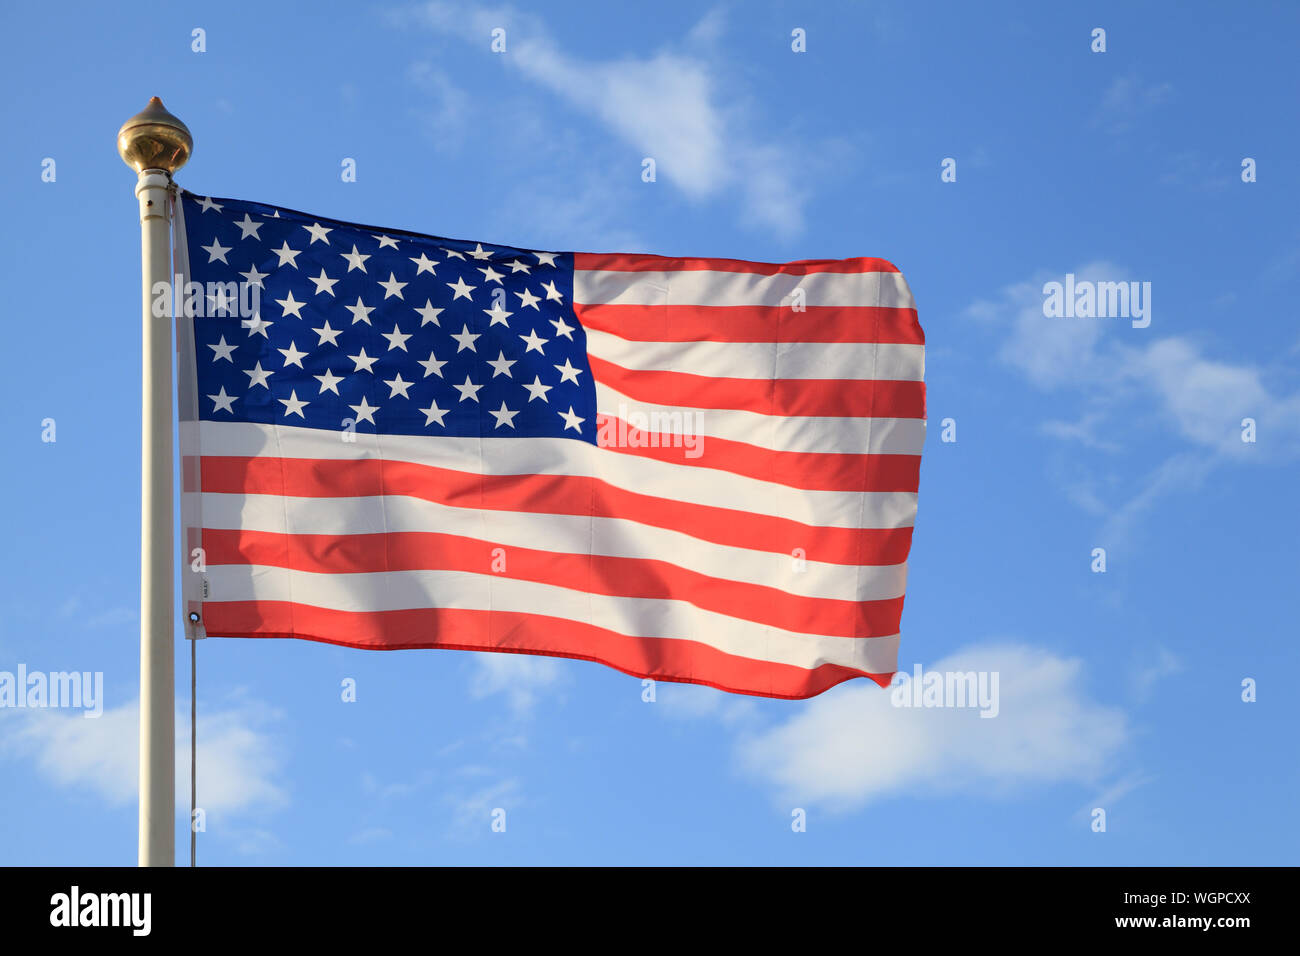 USA Flag, Stars and Stripes, National Flag, American, United States of America, flag pole Stock Photo